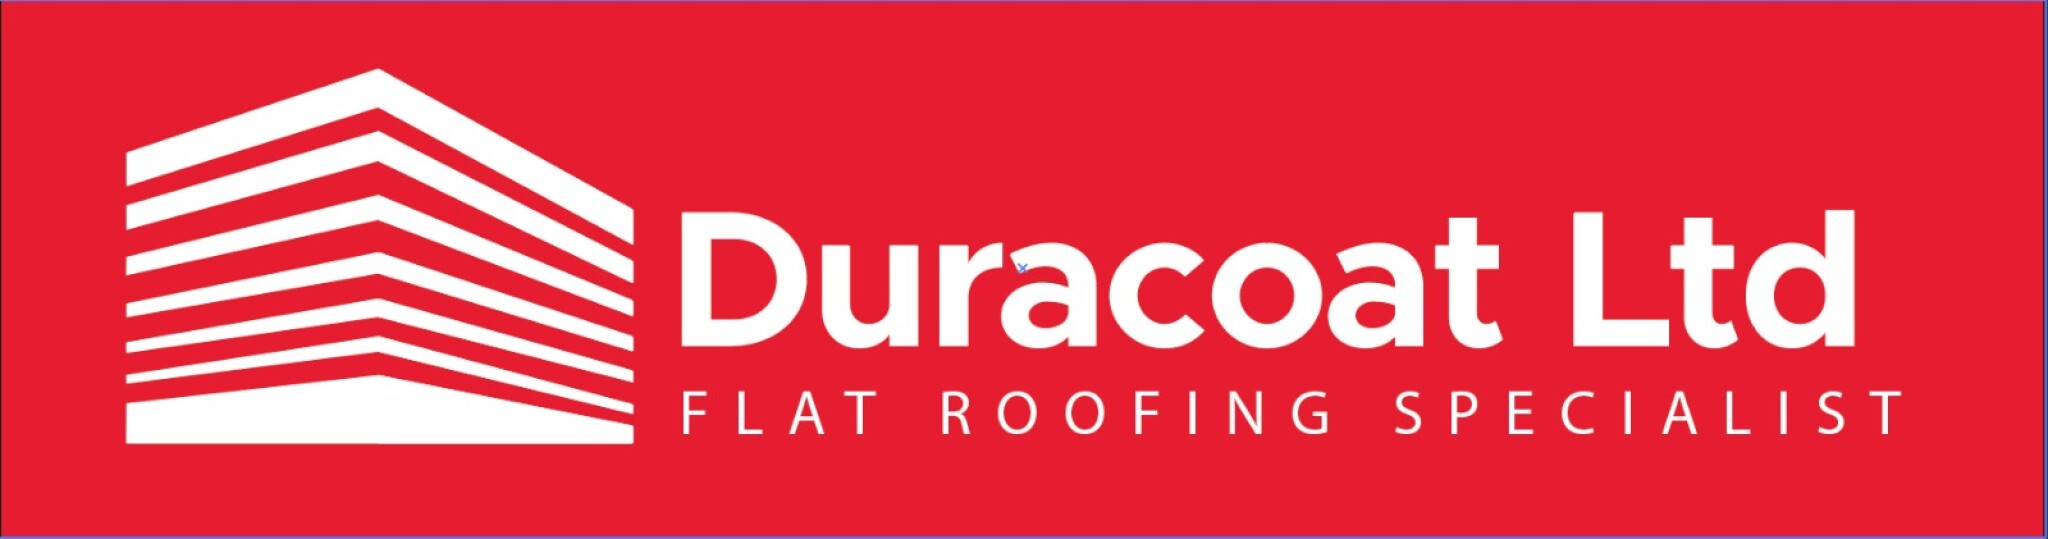 Duracoat Flat Roofing Specialist logo.jpg